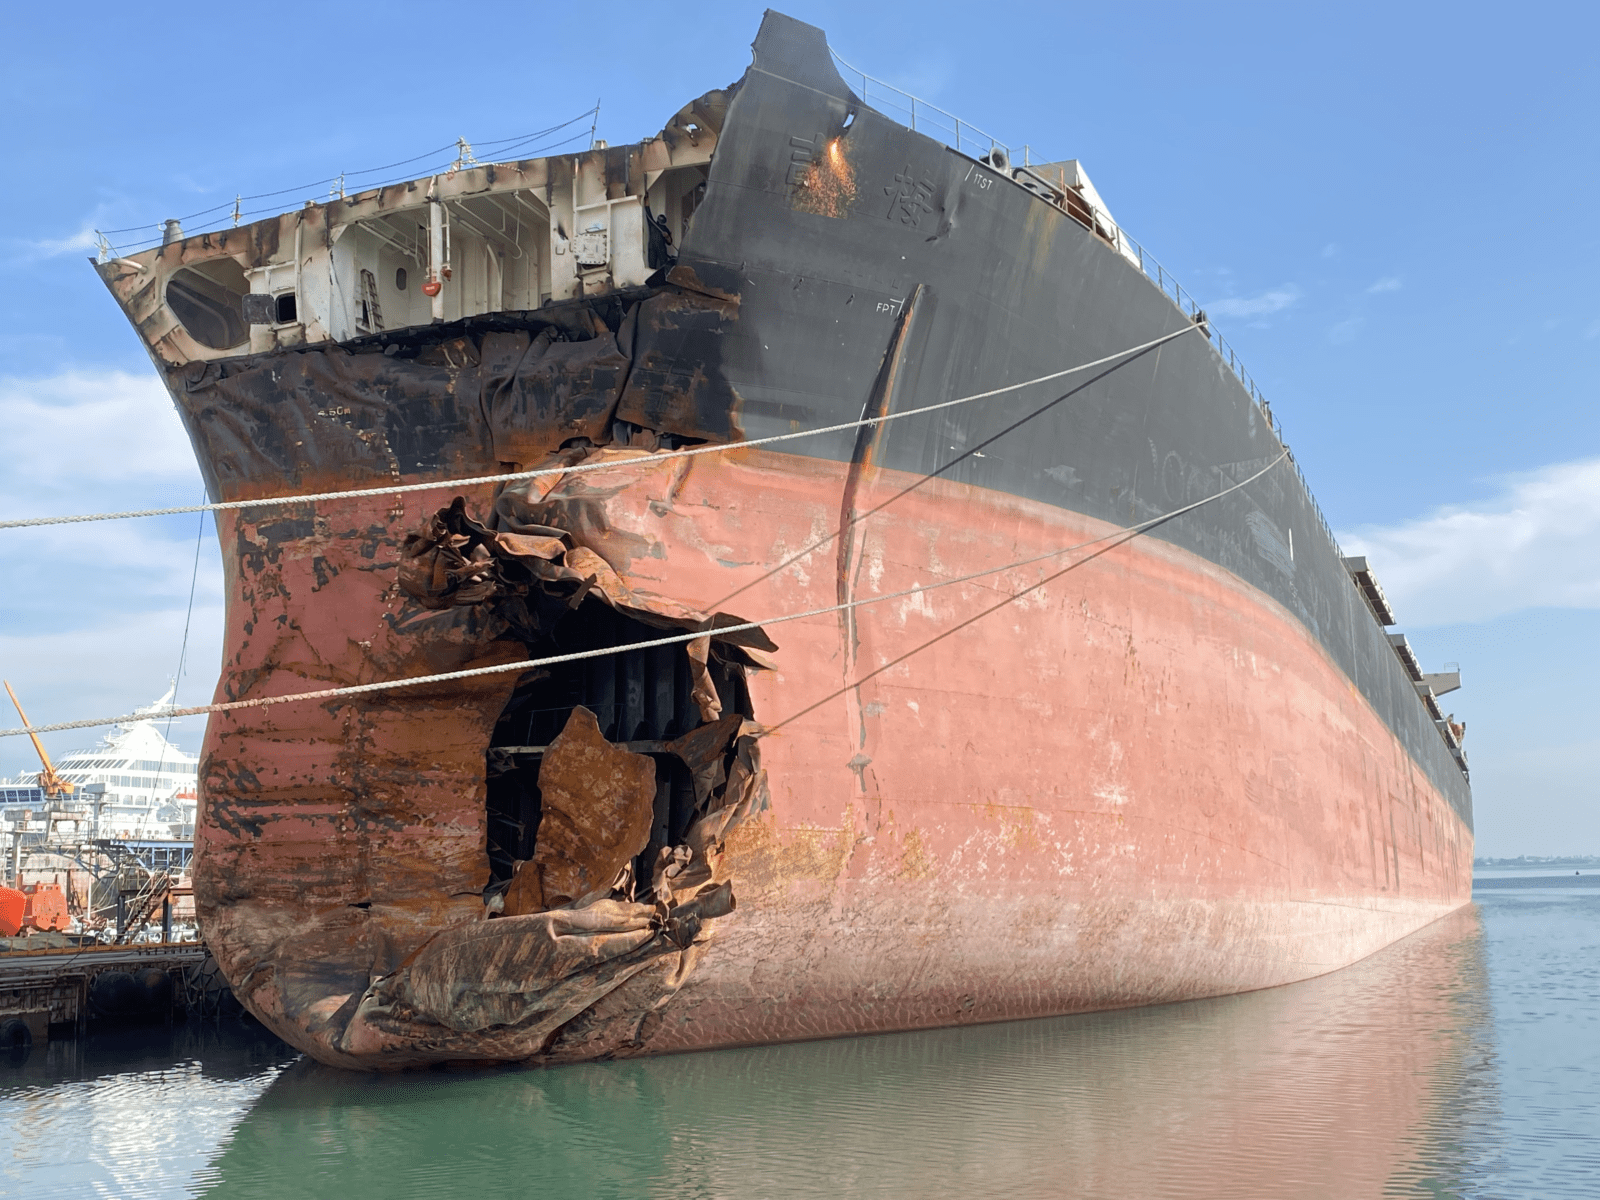 What is Collision bulkhead on Ship? Collision bulkhead. 